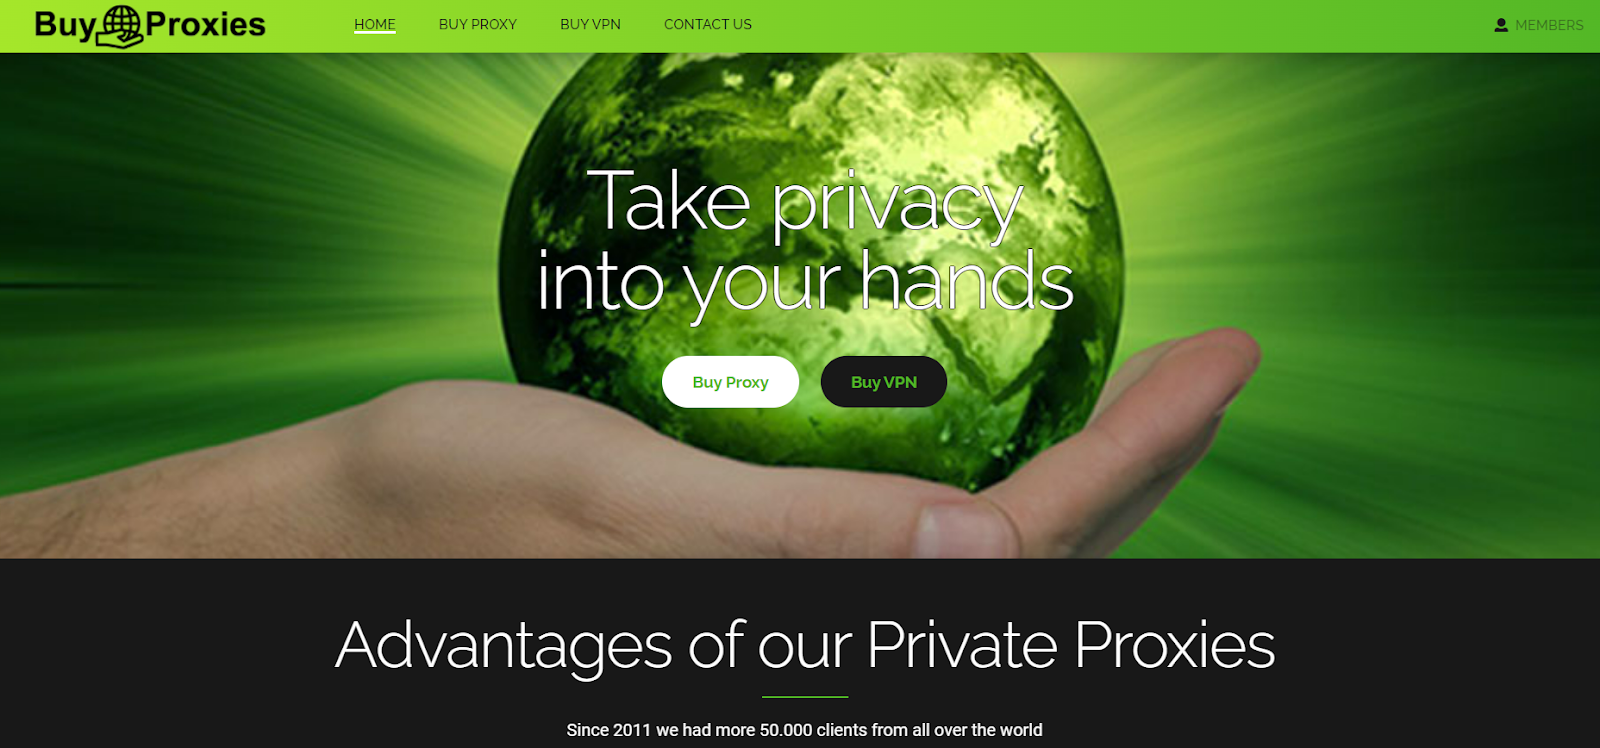 buyproxies homepage